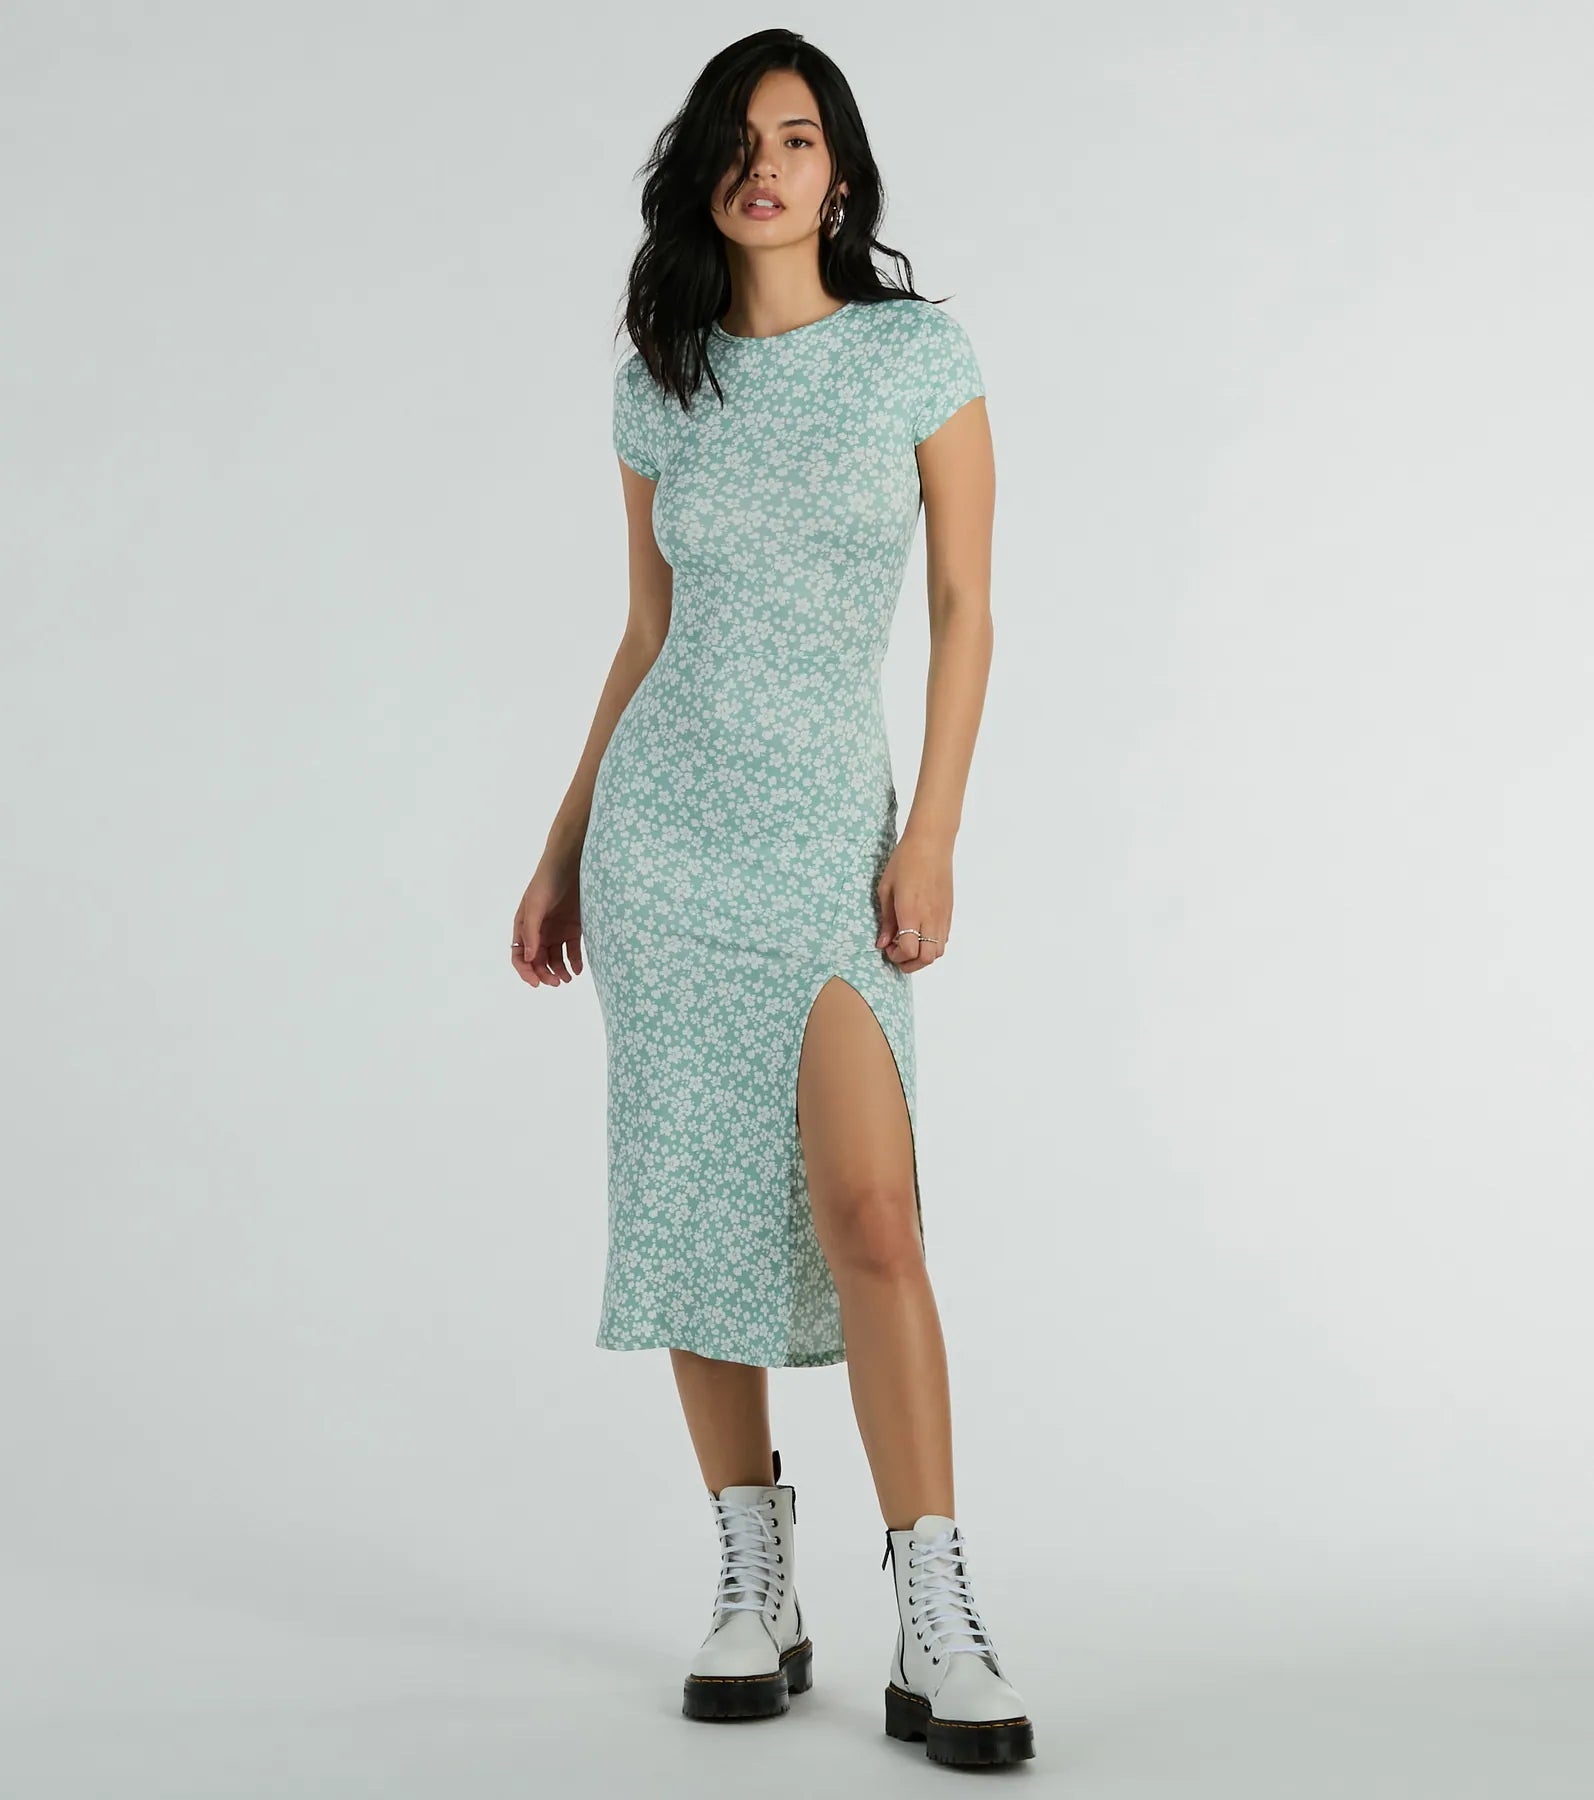 Stretchy Cutout Slit Knit Floral Print Crew Neck Short Sleeves Sleeves Spring Bodycon Dress/Midi Dress